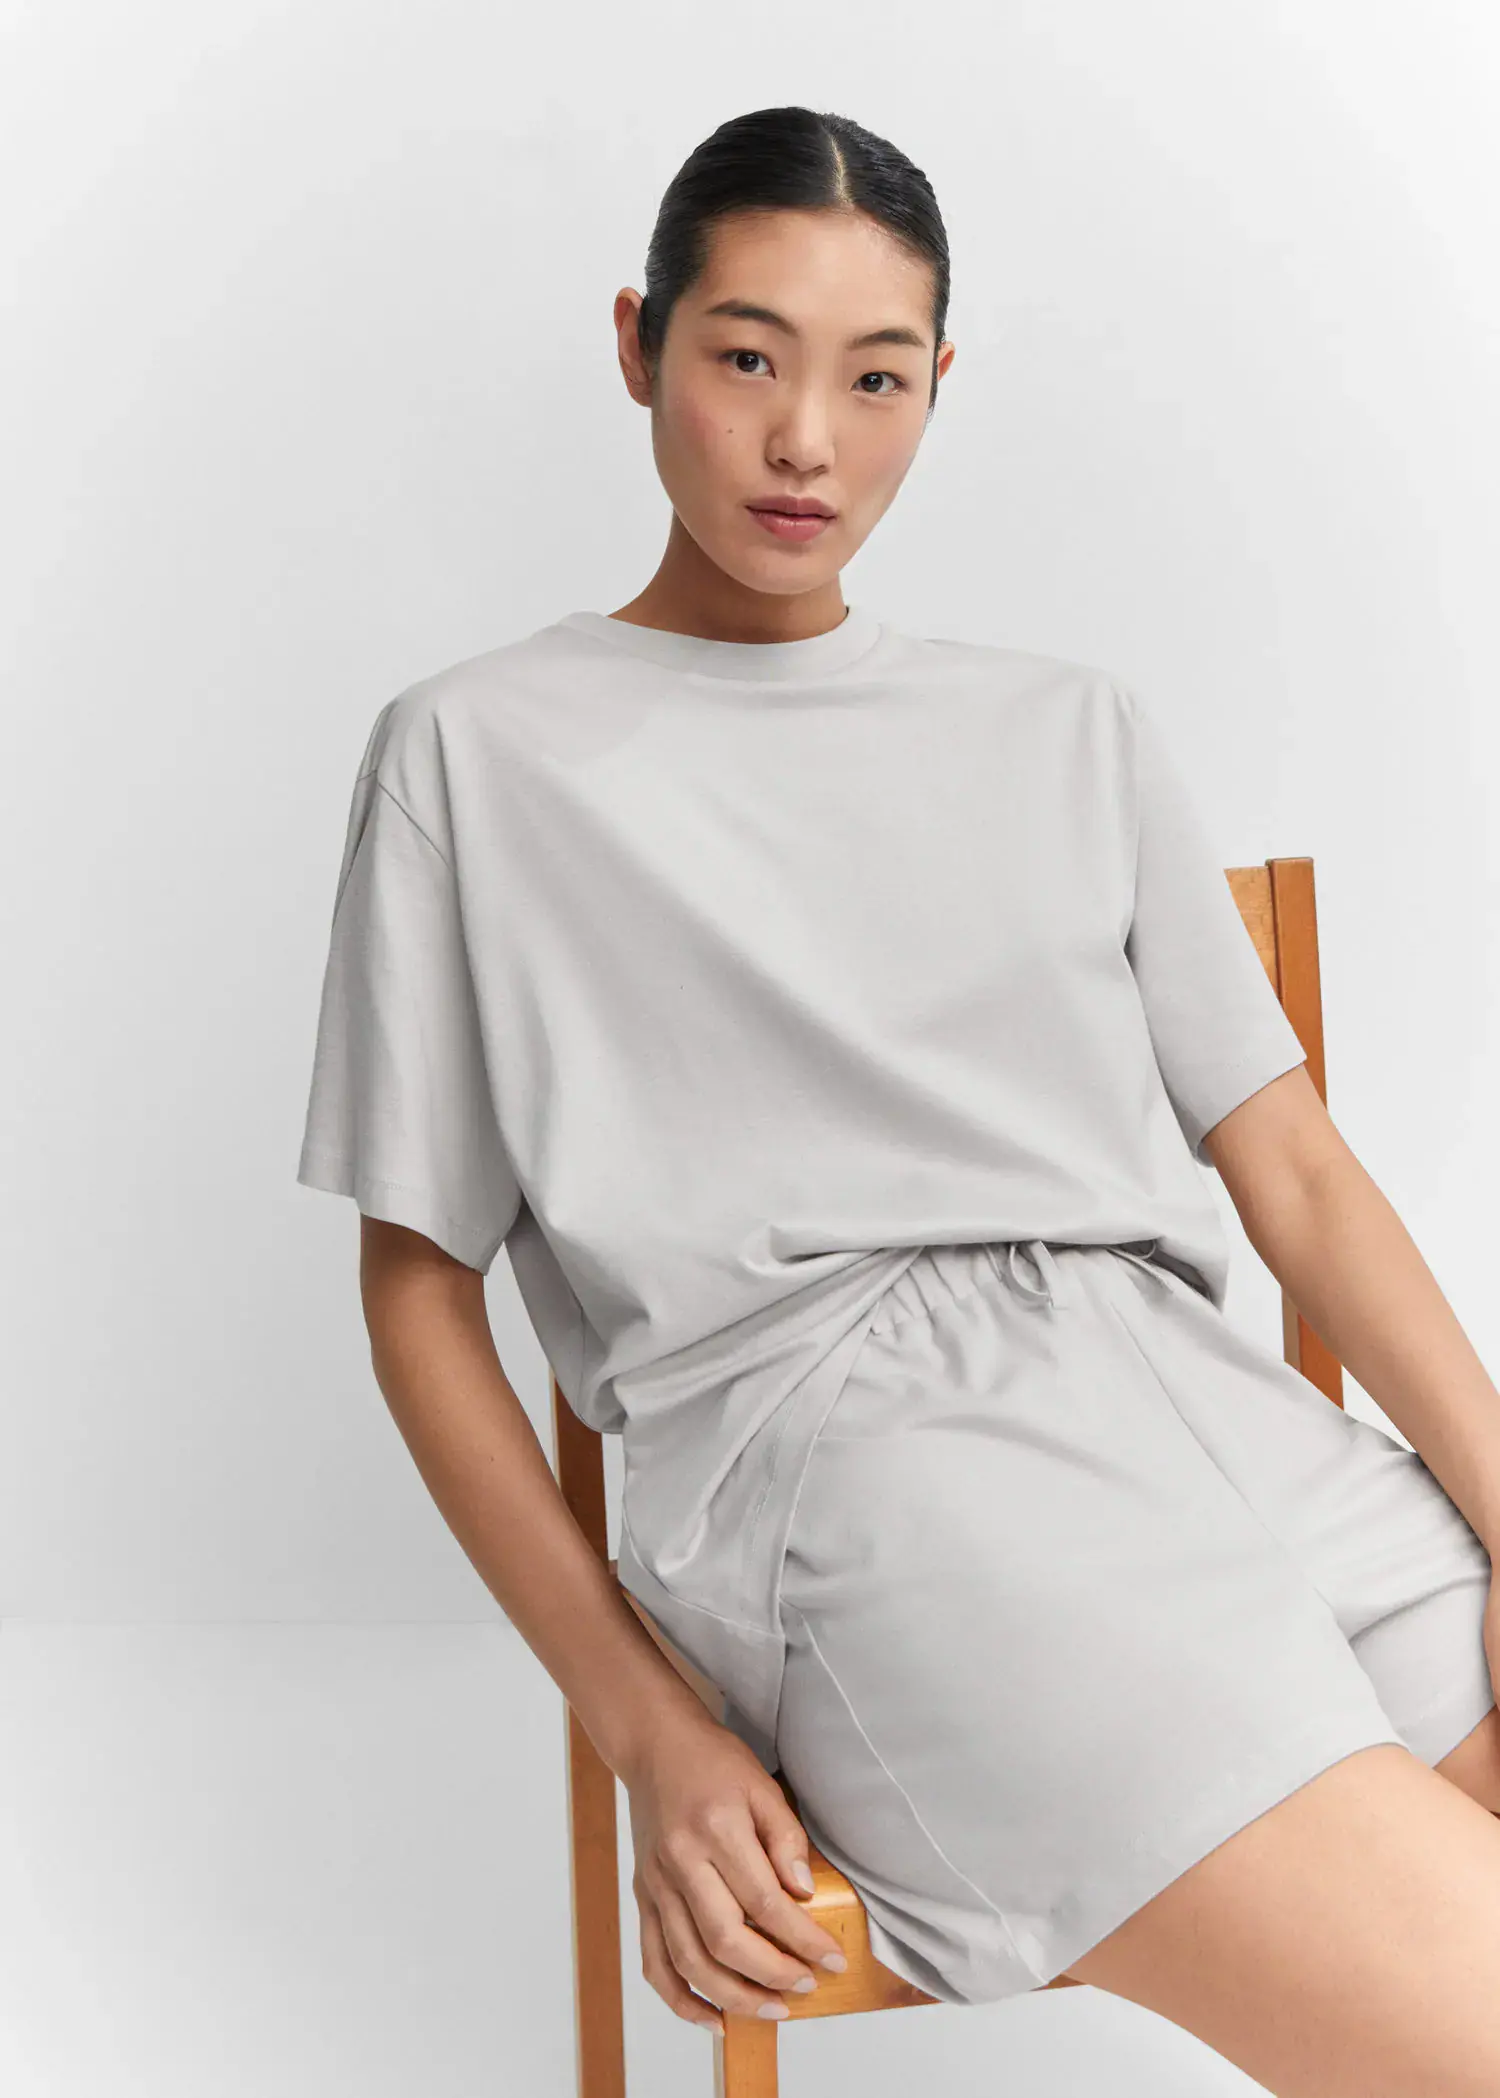 Mango Short cotton pyjamas. a person sitting on a chair wearing a white shirt. 